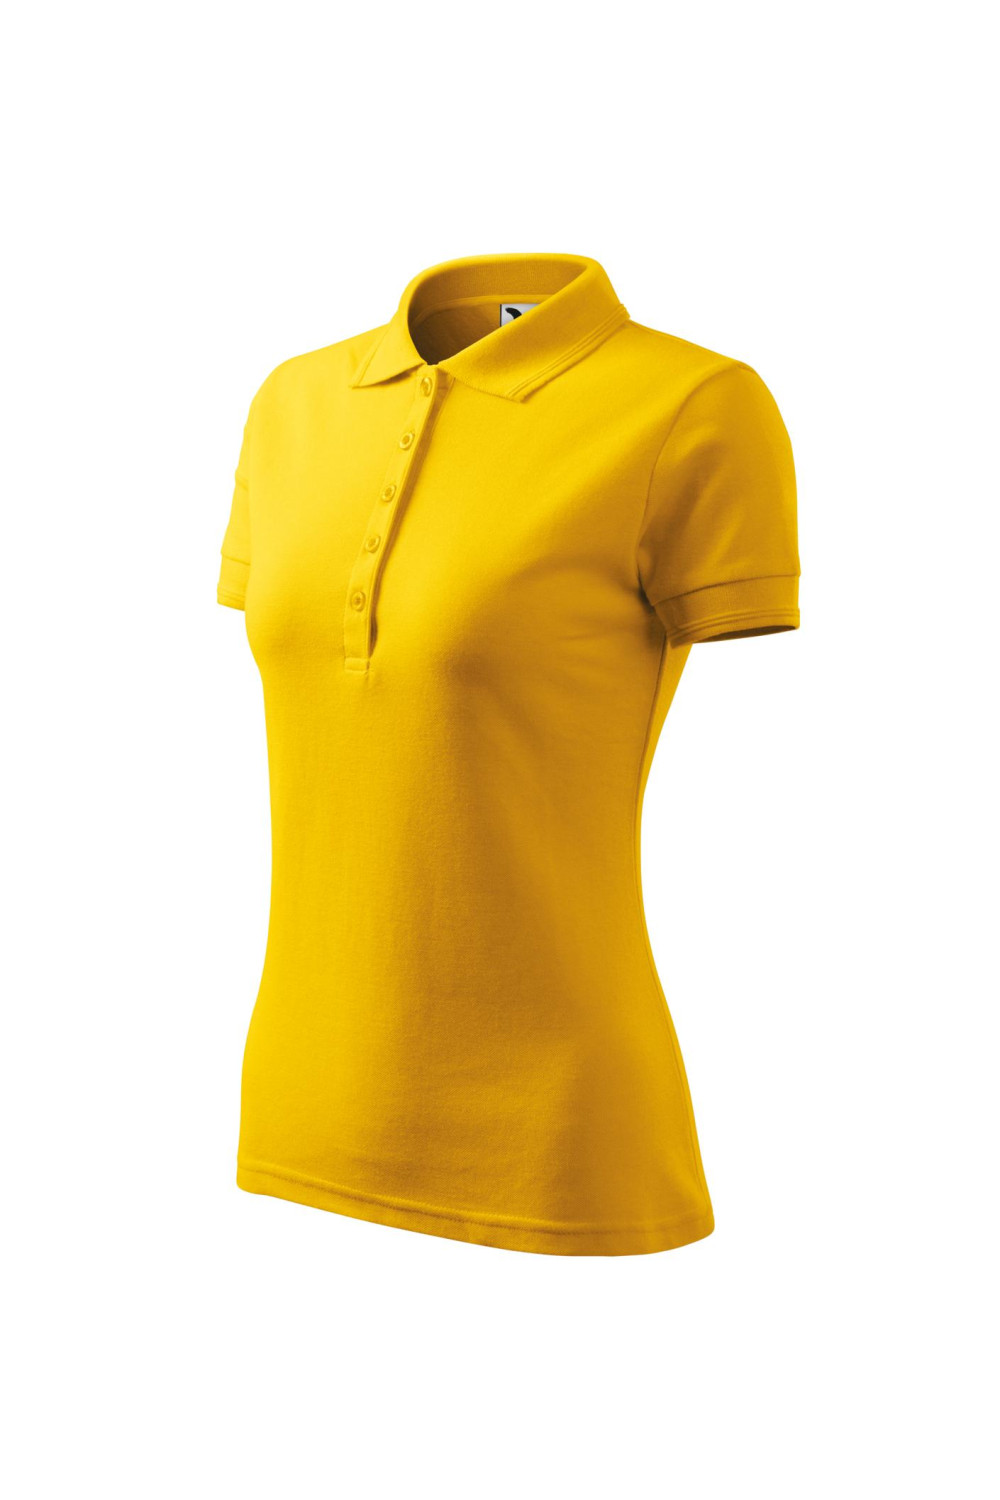 PIQUE POLO 210 MALFINI ADLER Koszulka polo damska klasyczna bawełna/poliester żółty